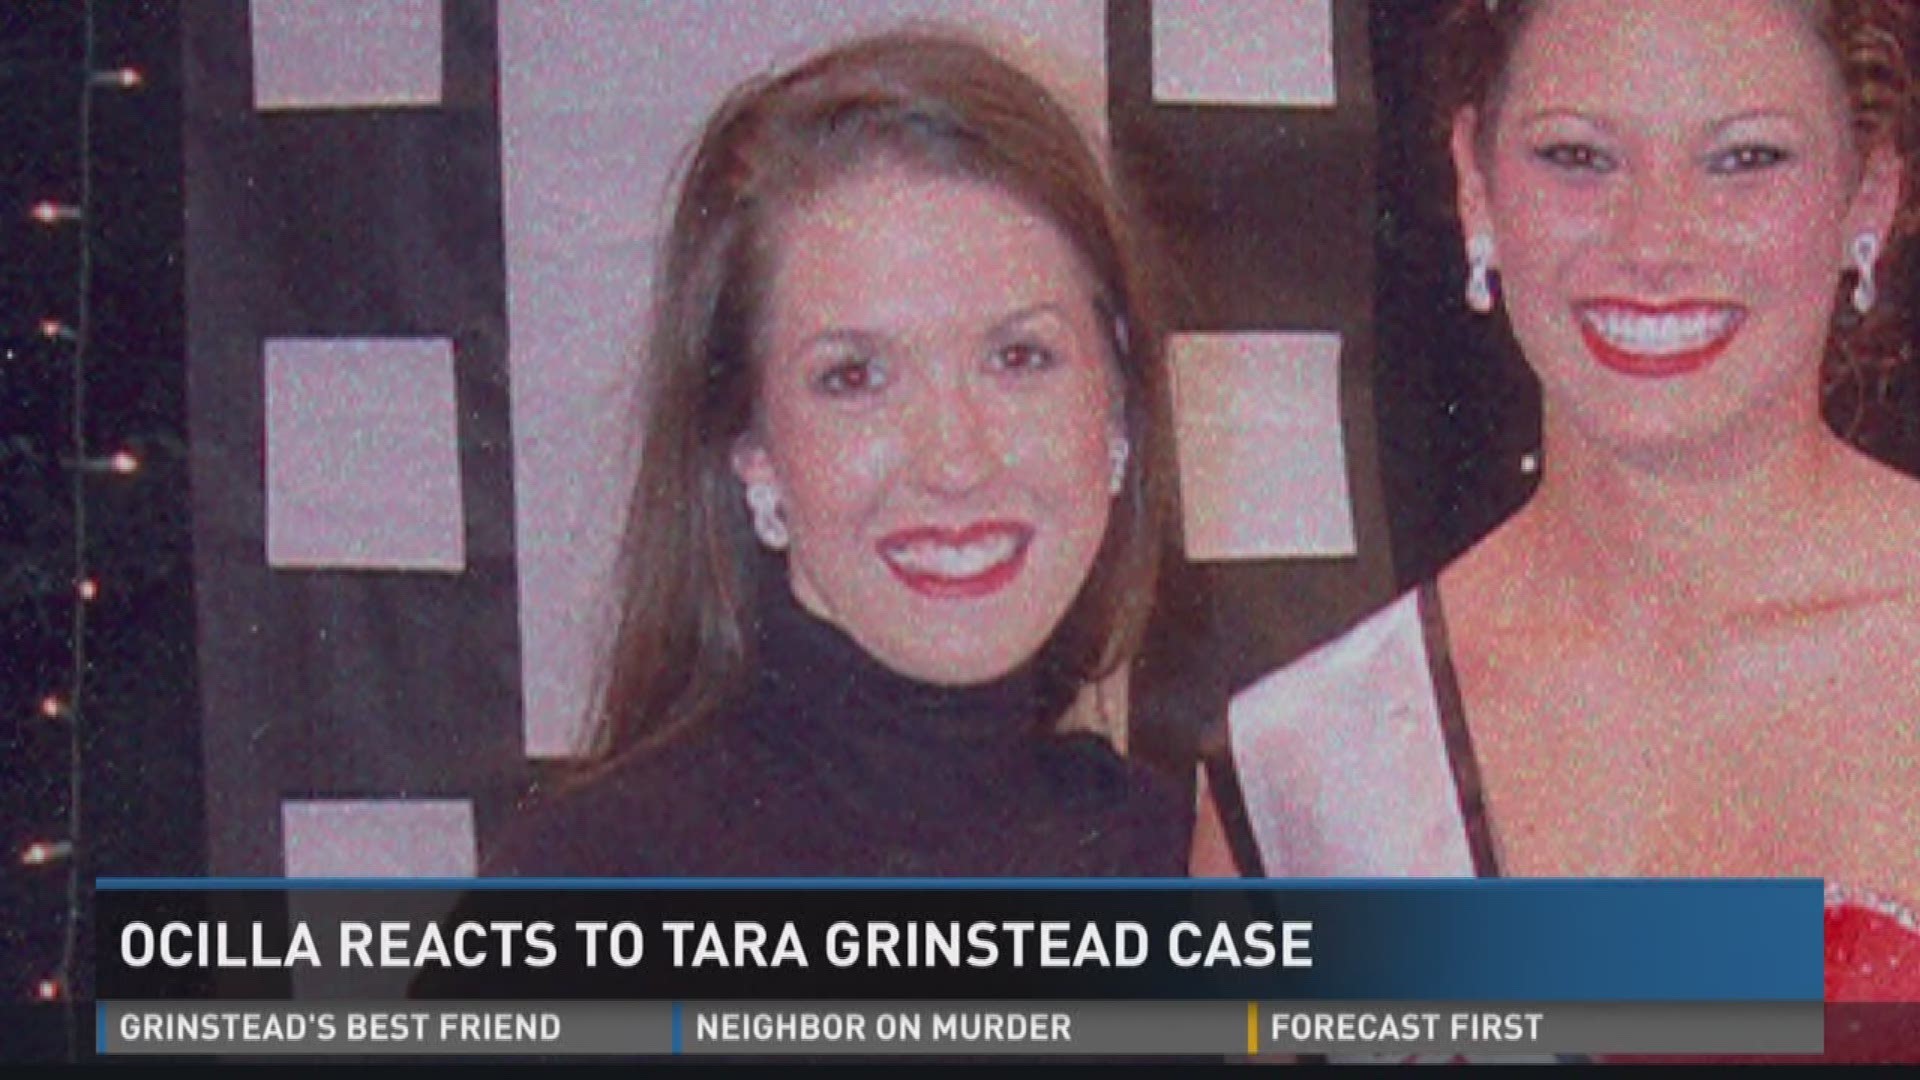 Ocilla reacts to Tara Grinstead case